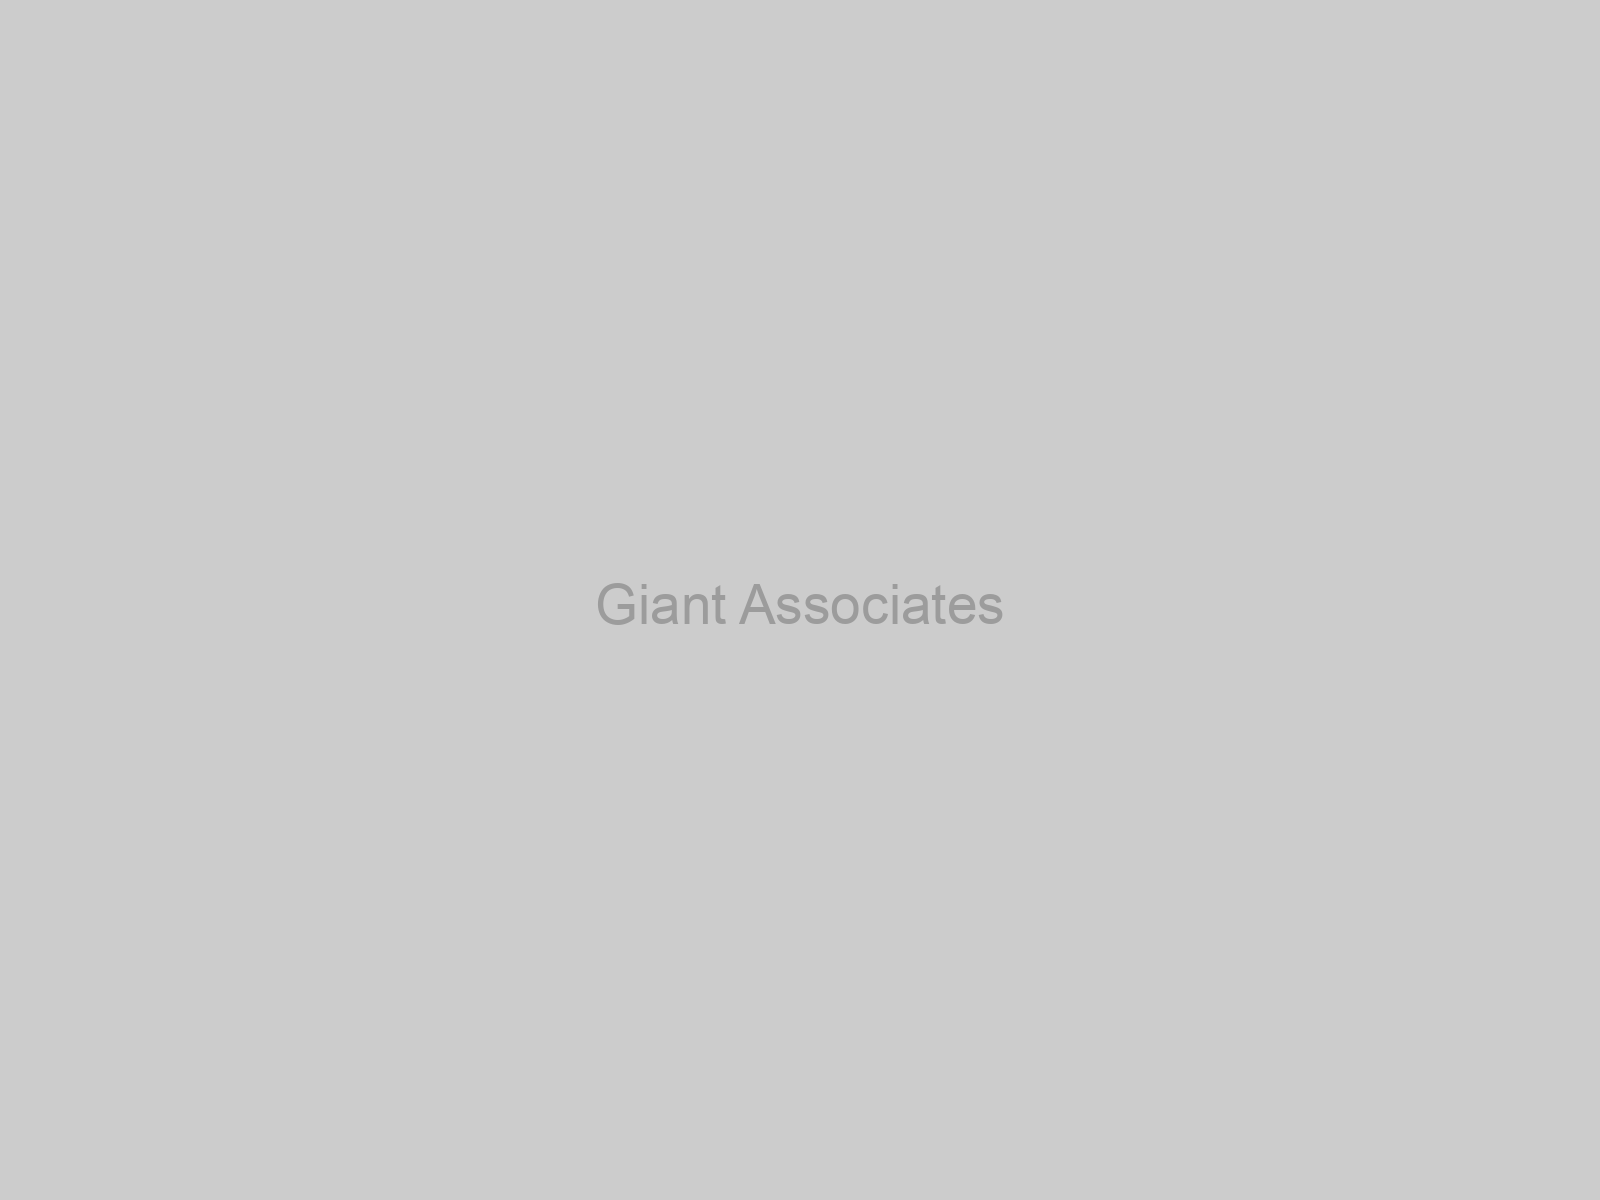 Giant Associates